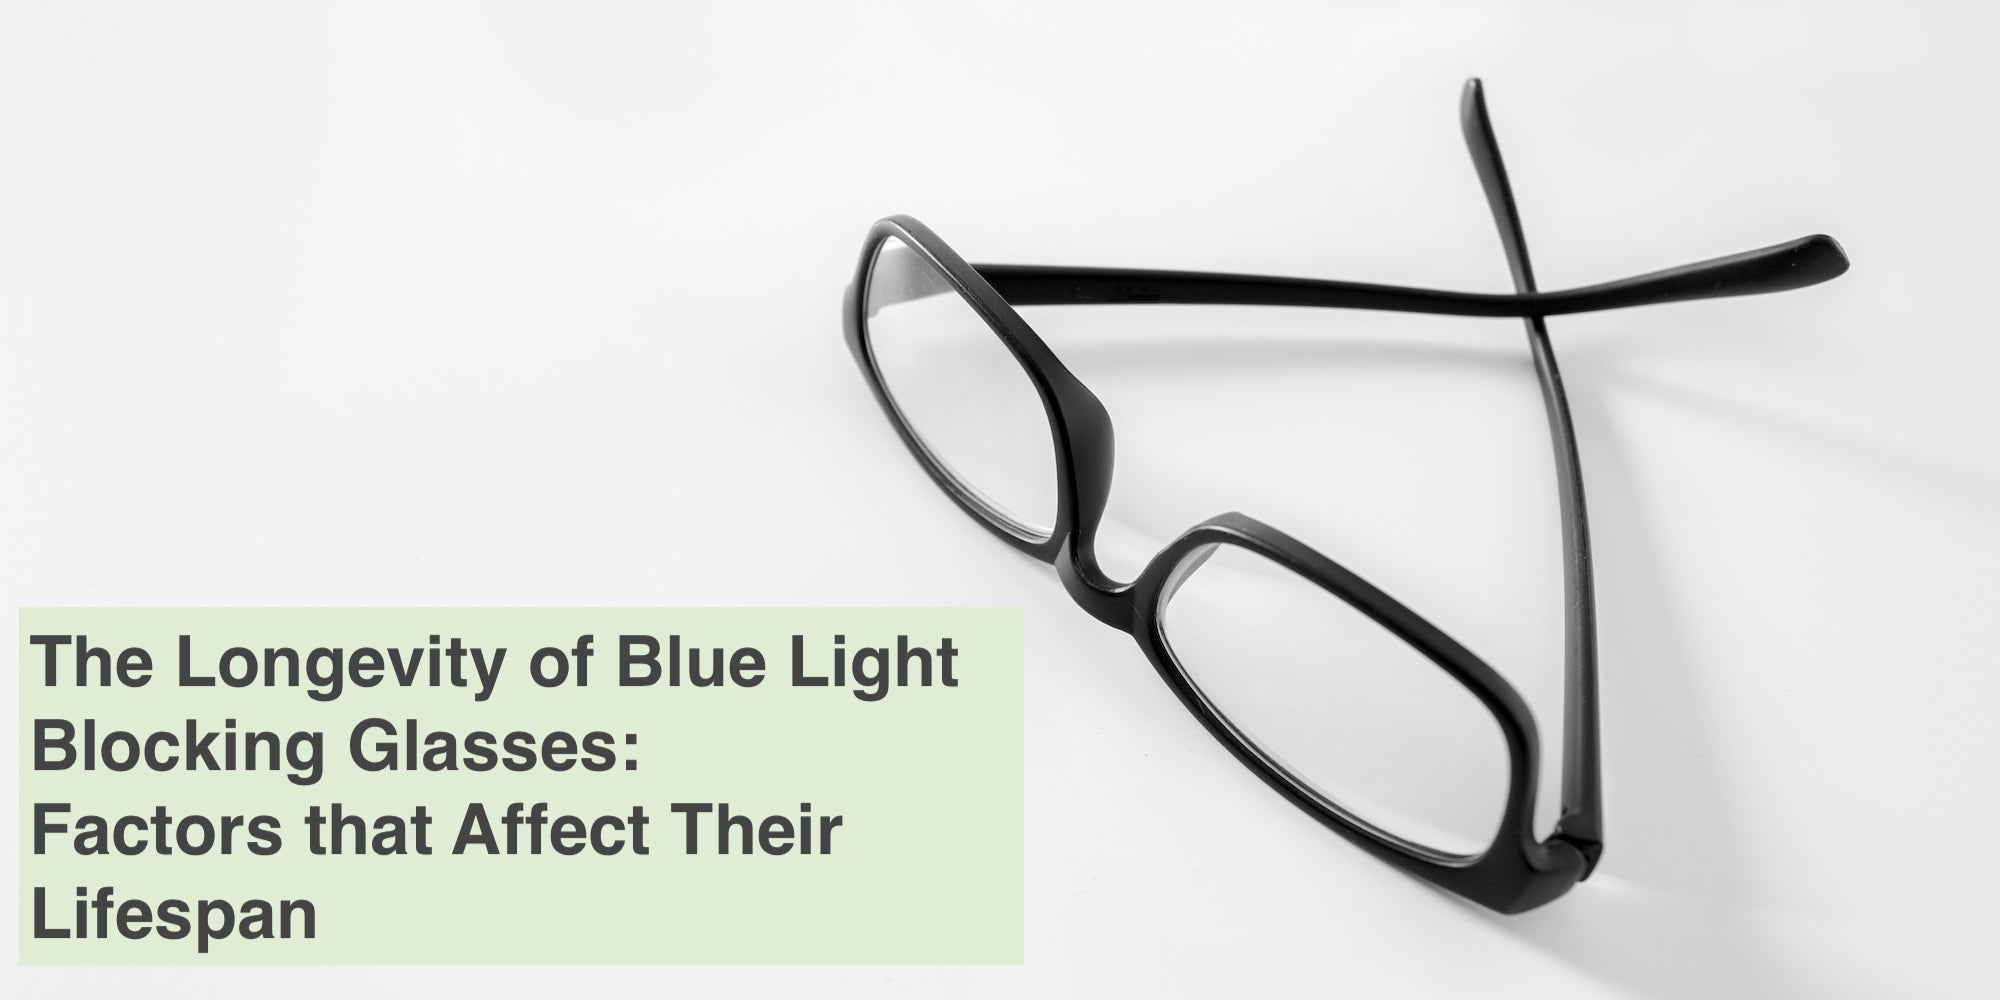 The Longevity of Blue Light Blocking Glasses: Factors that Affect Their Lifespan